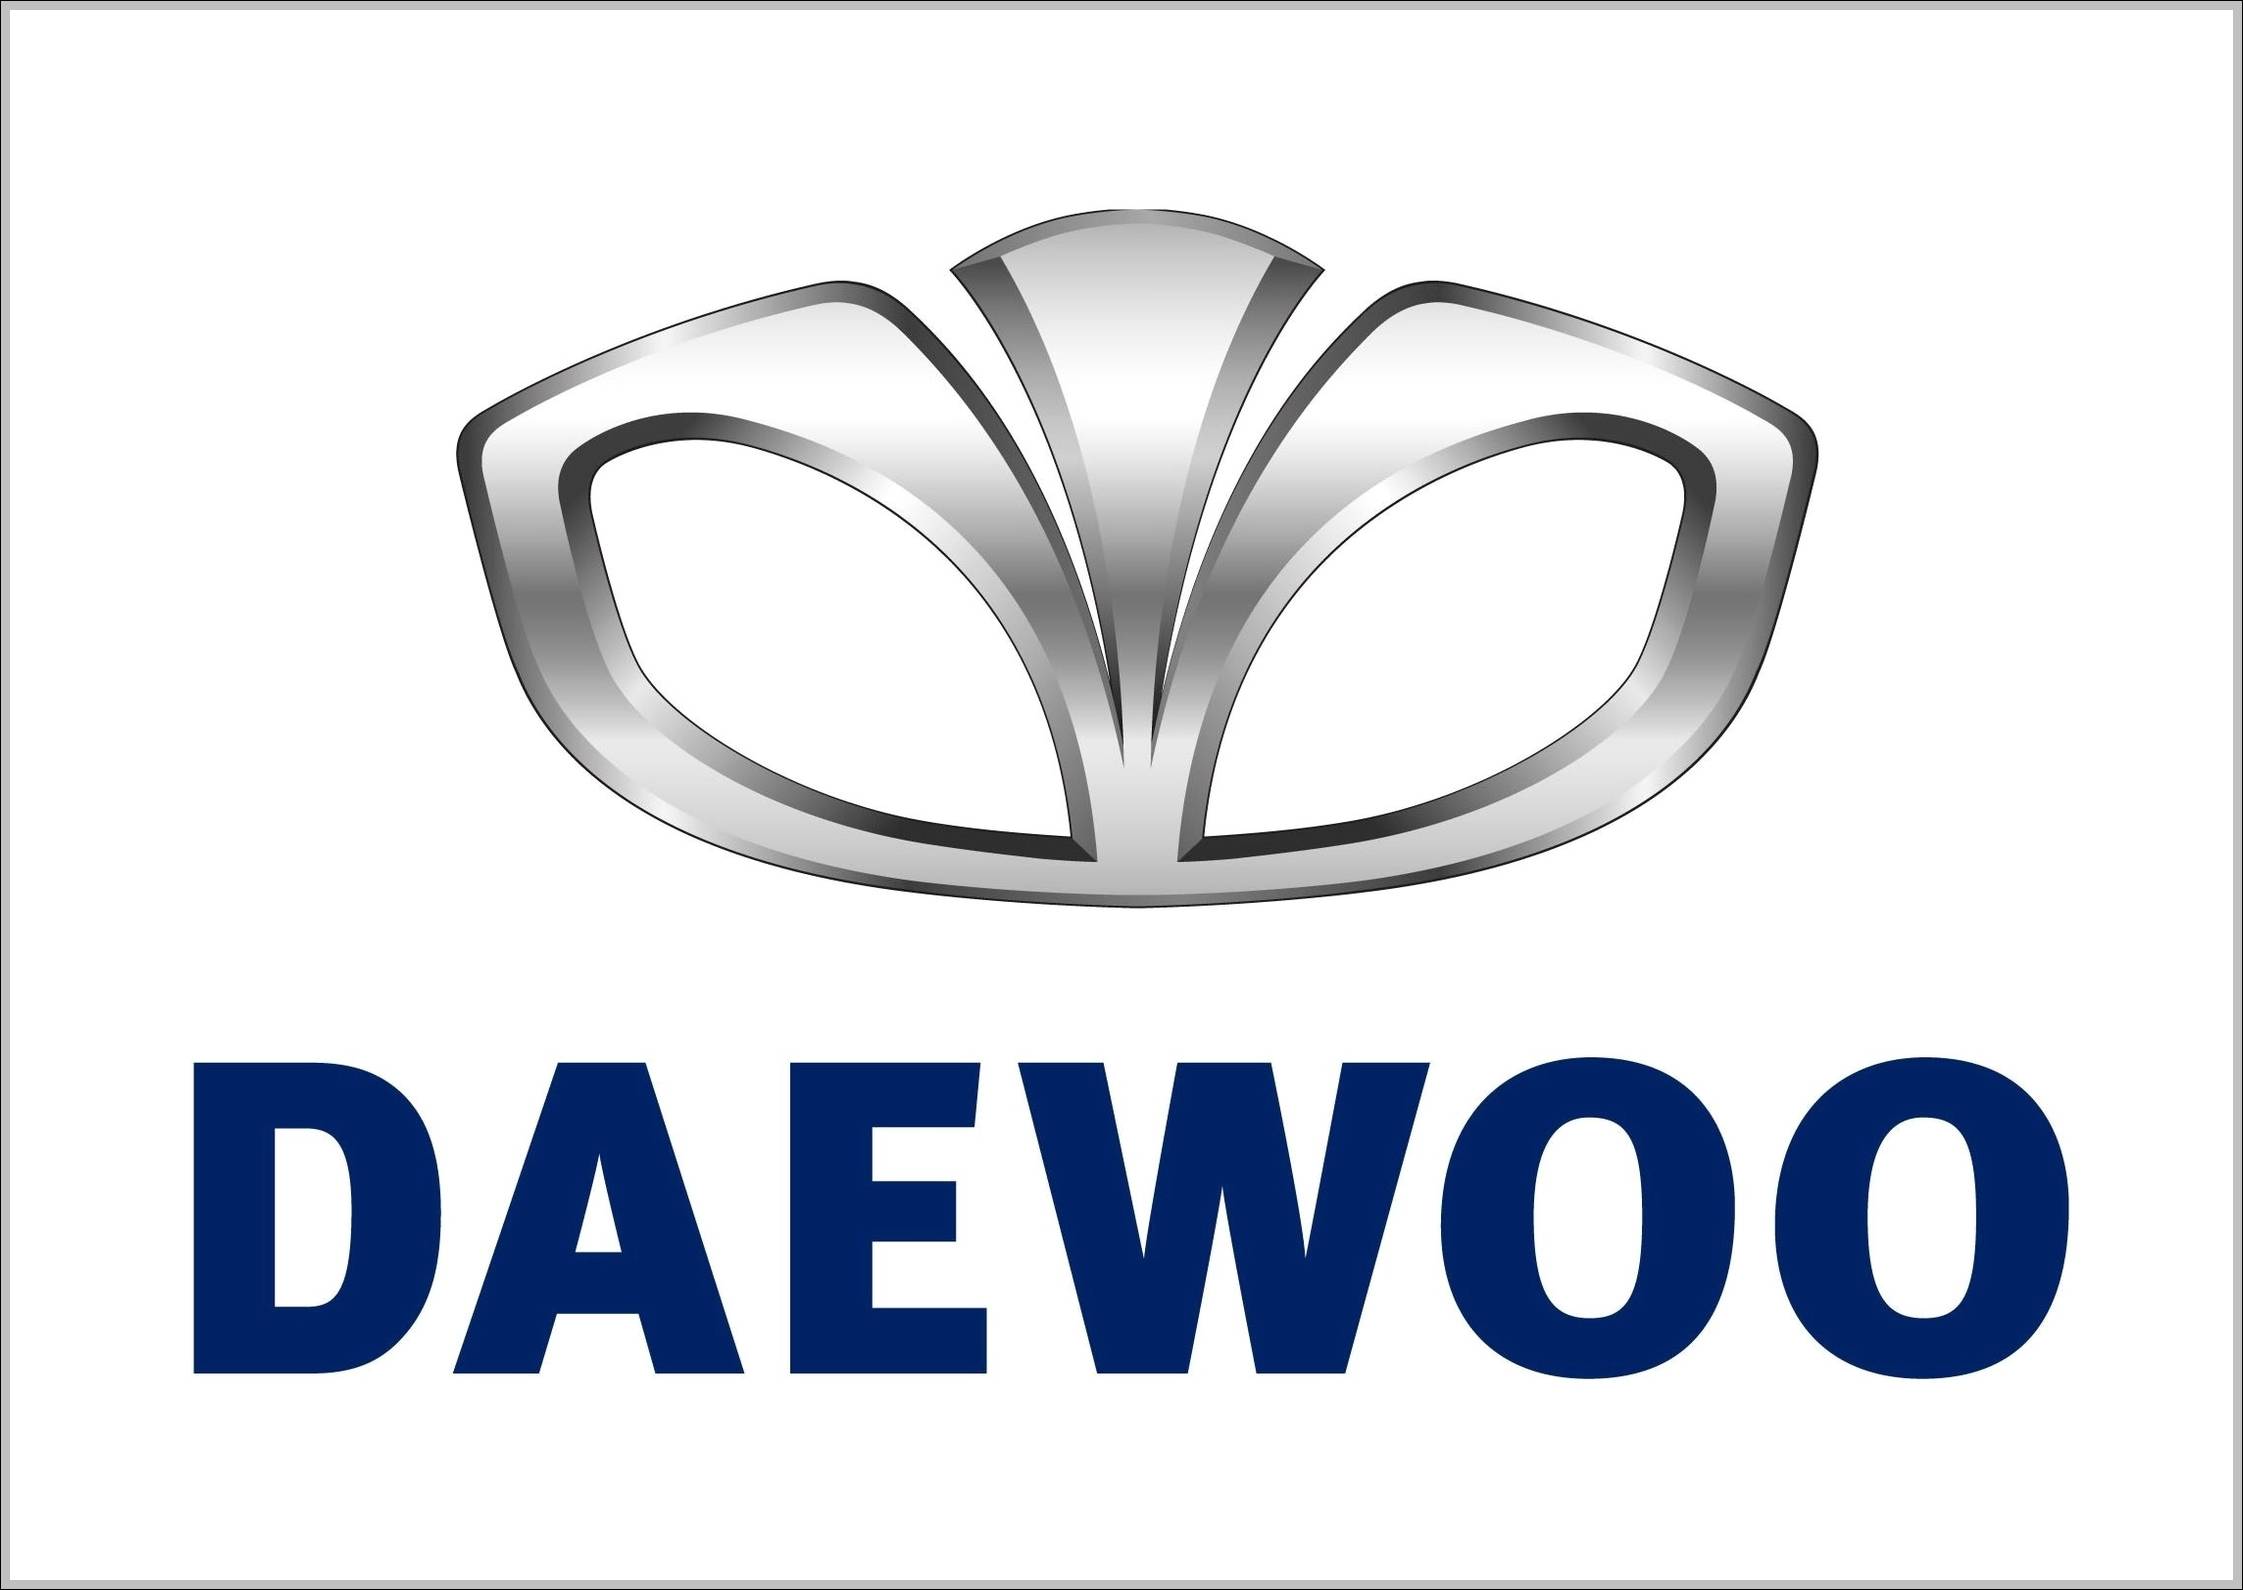 Daewoo auto logo